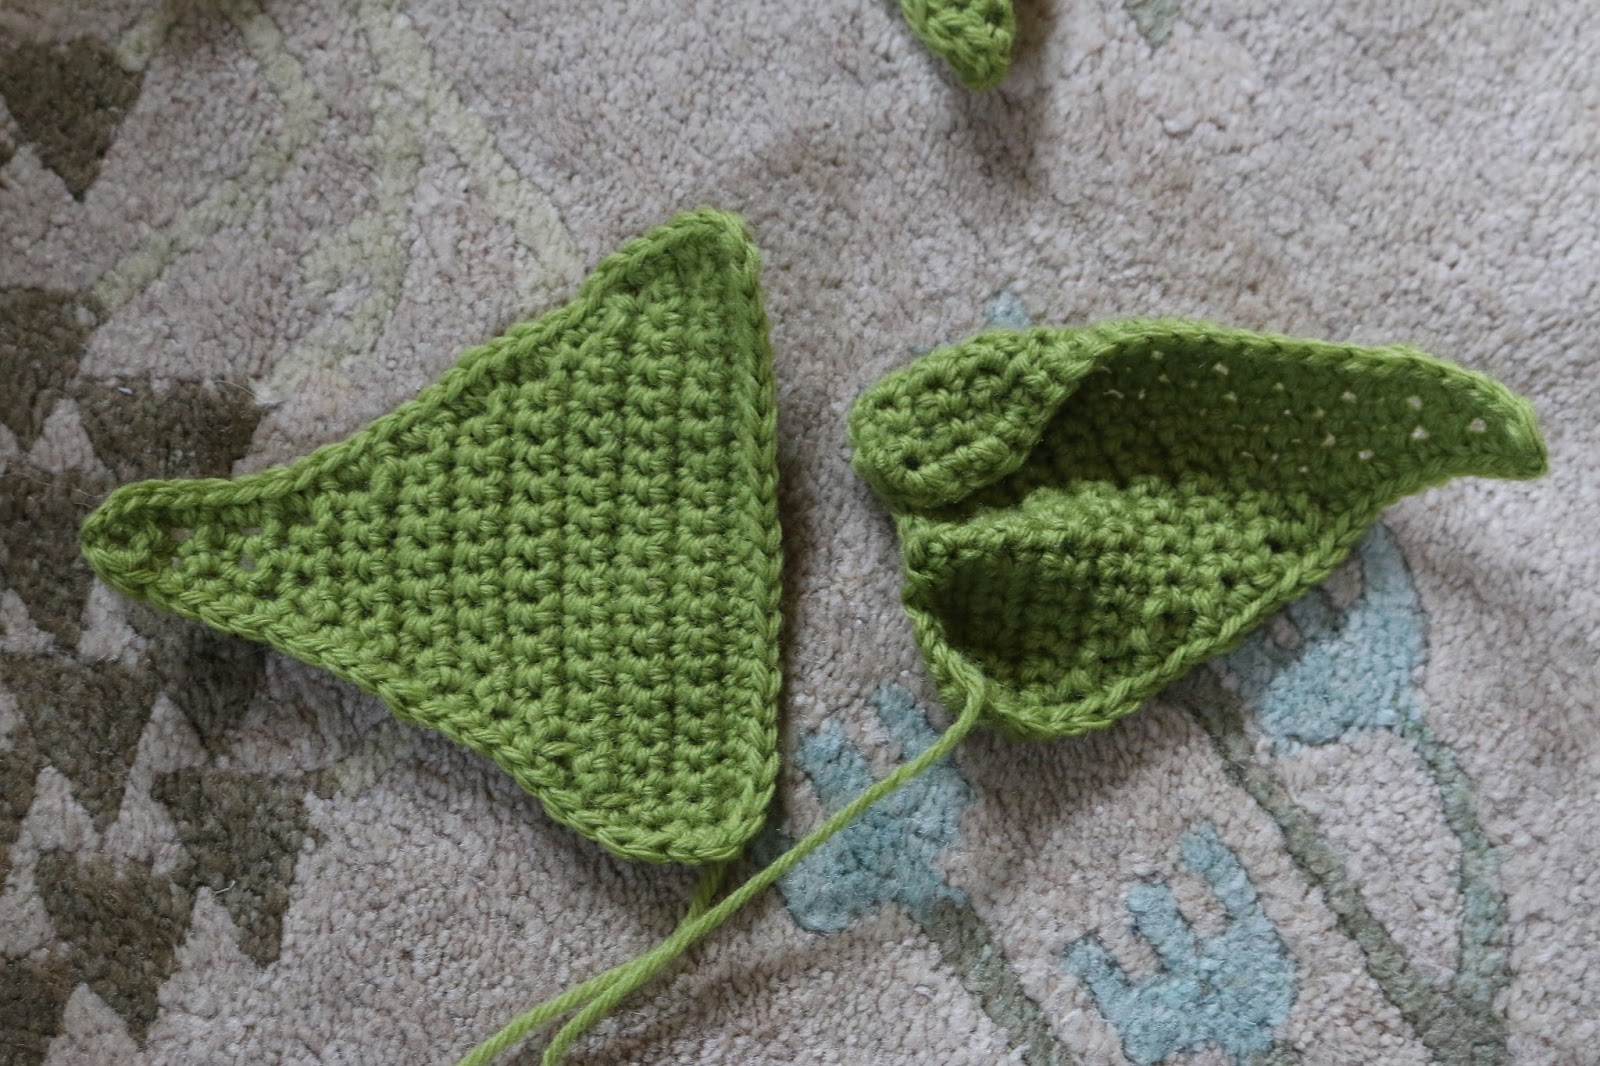 Crochet Yoda Hat Pattern Free Chemknits Crochet A Yoda Ba Hat I Will